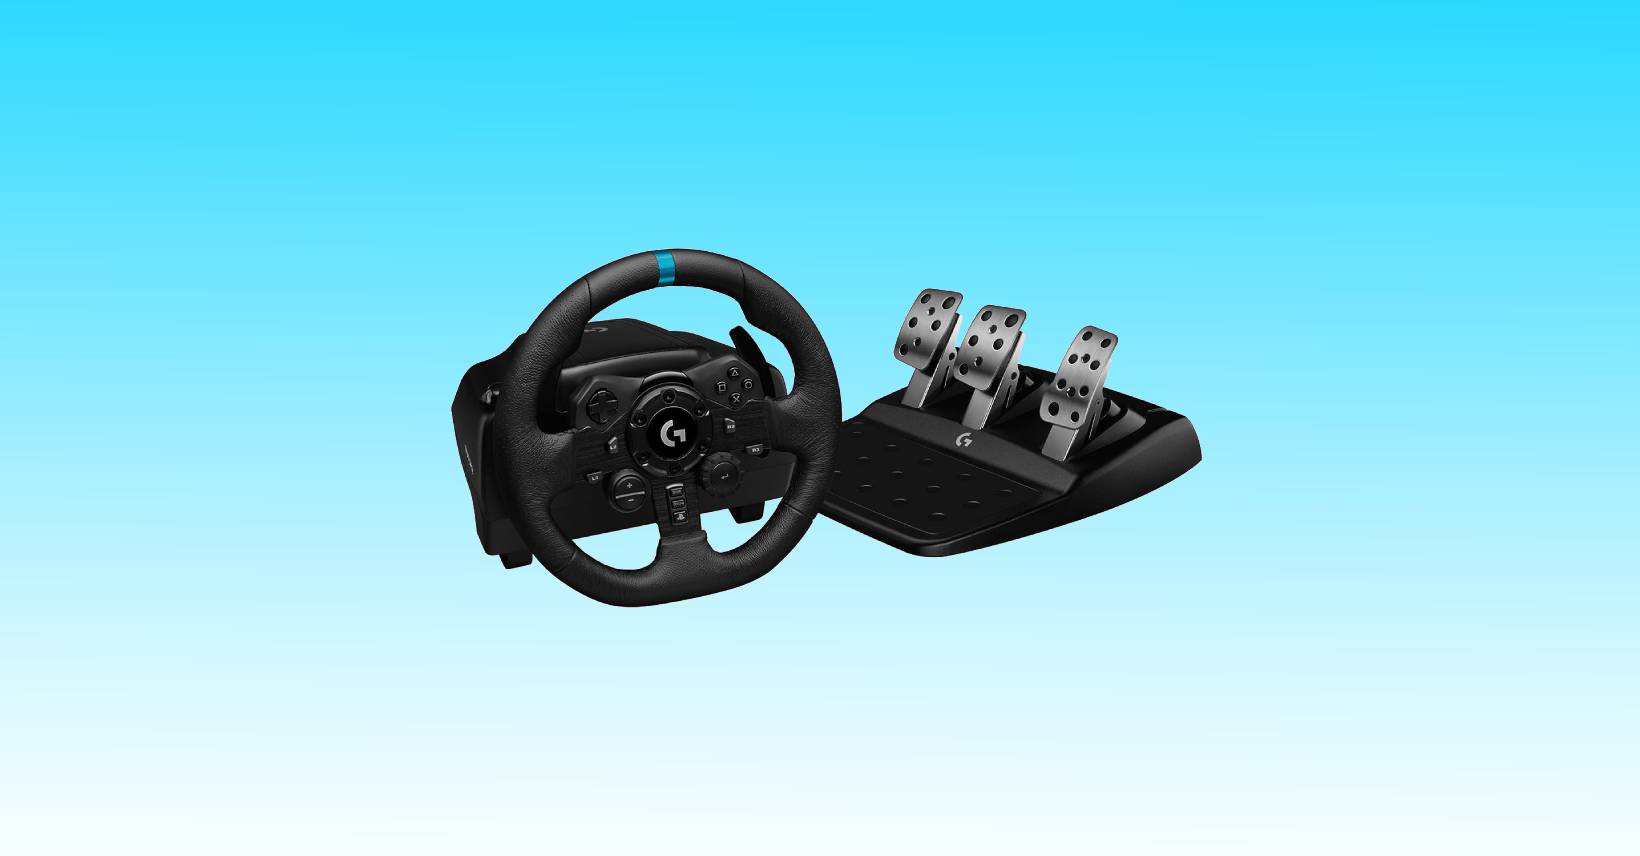 Best Logitech G923 driving force racing wheel | HGworld